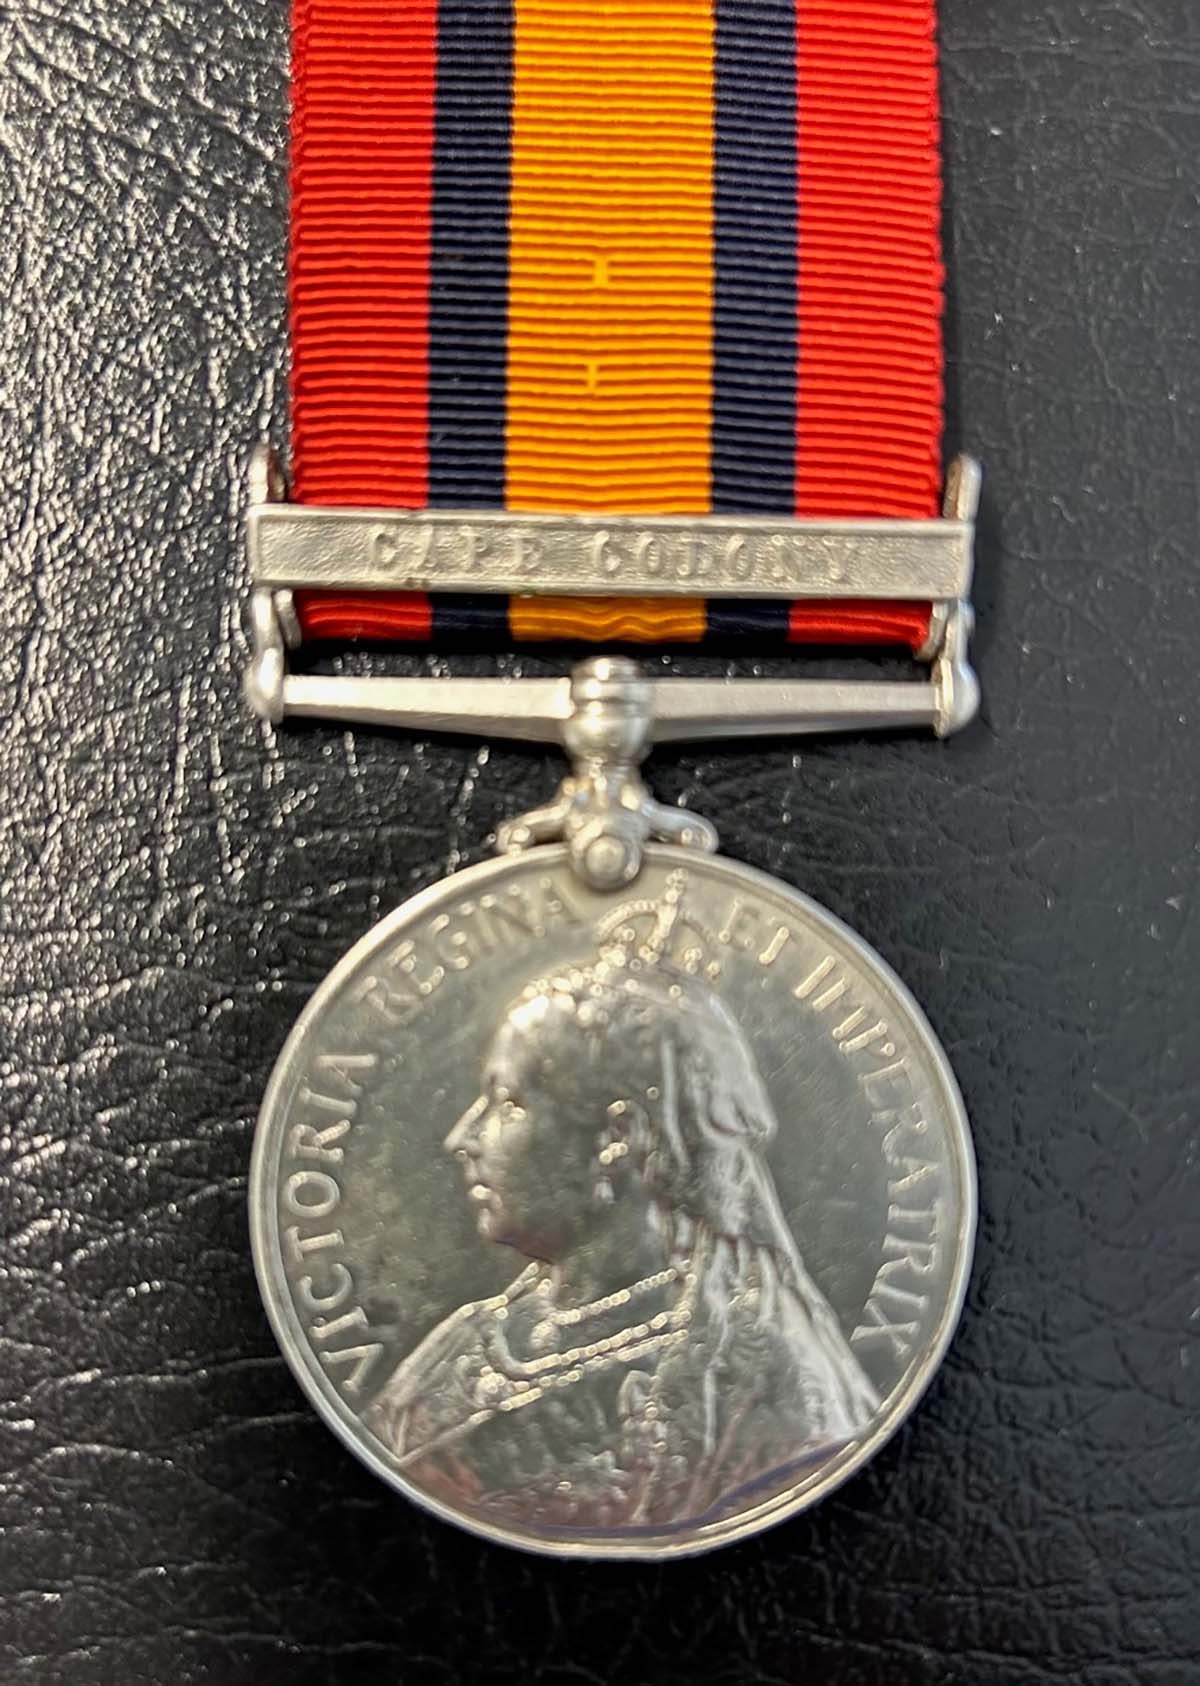 Worcestershire Medal Service: QSA. 1 clasp - Merrifield - Uitenhage VR